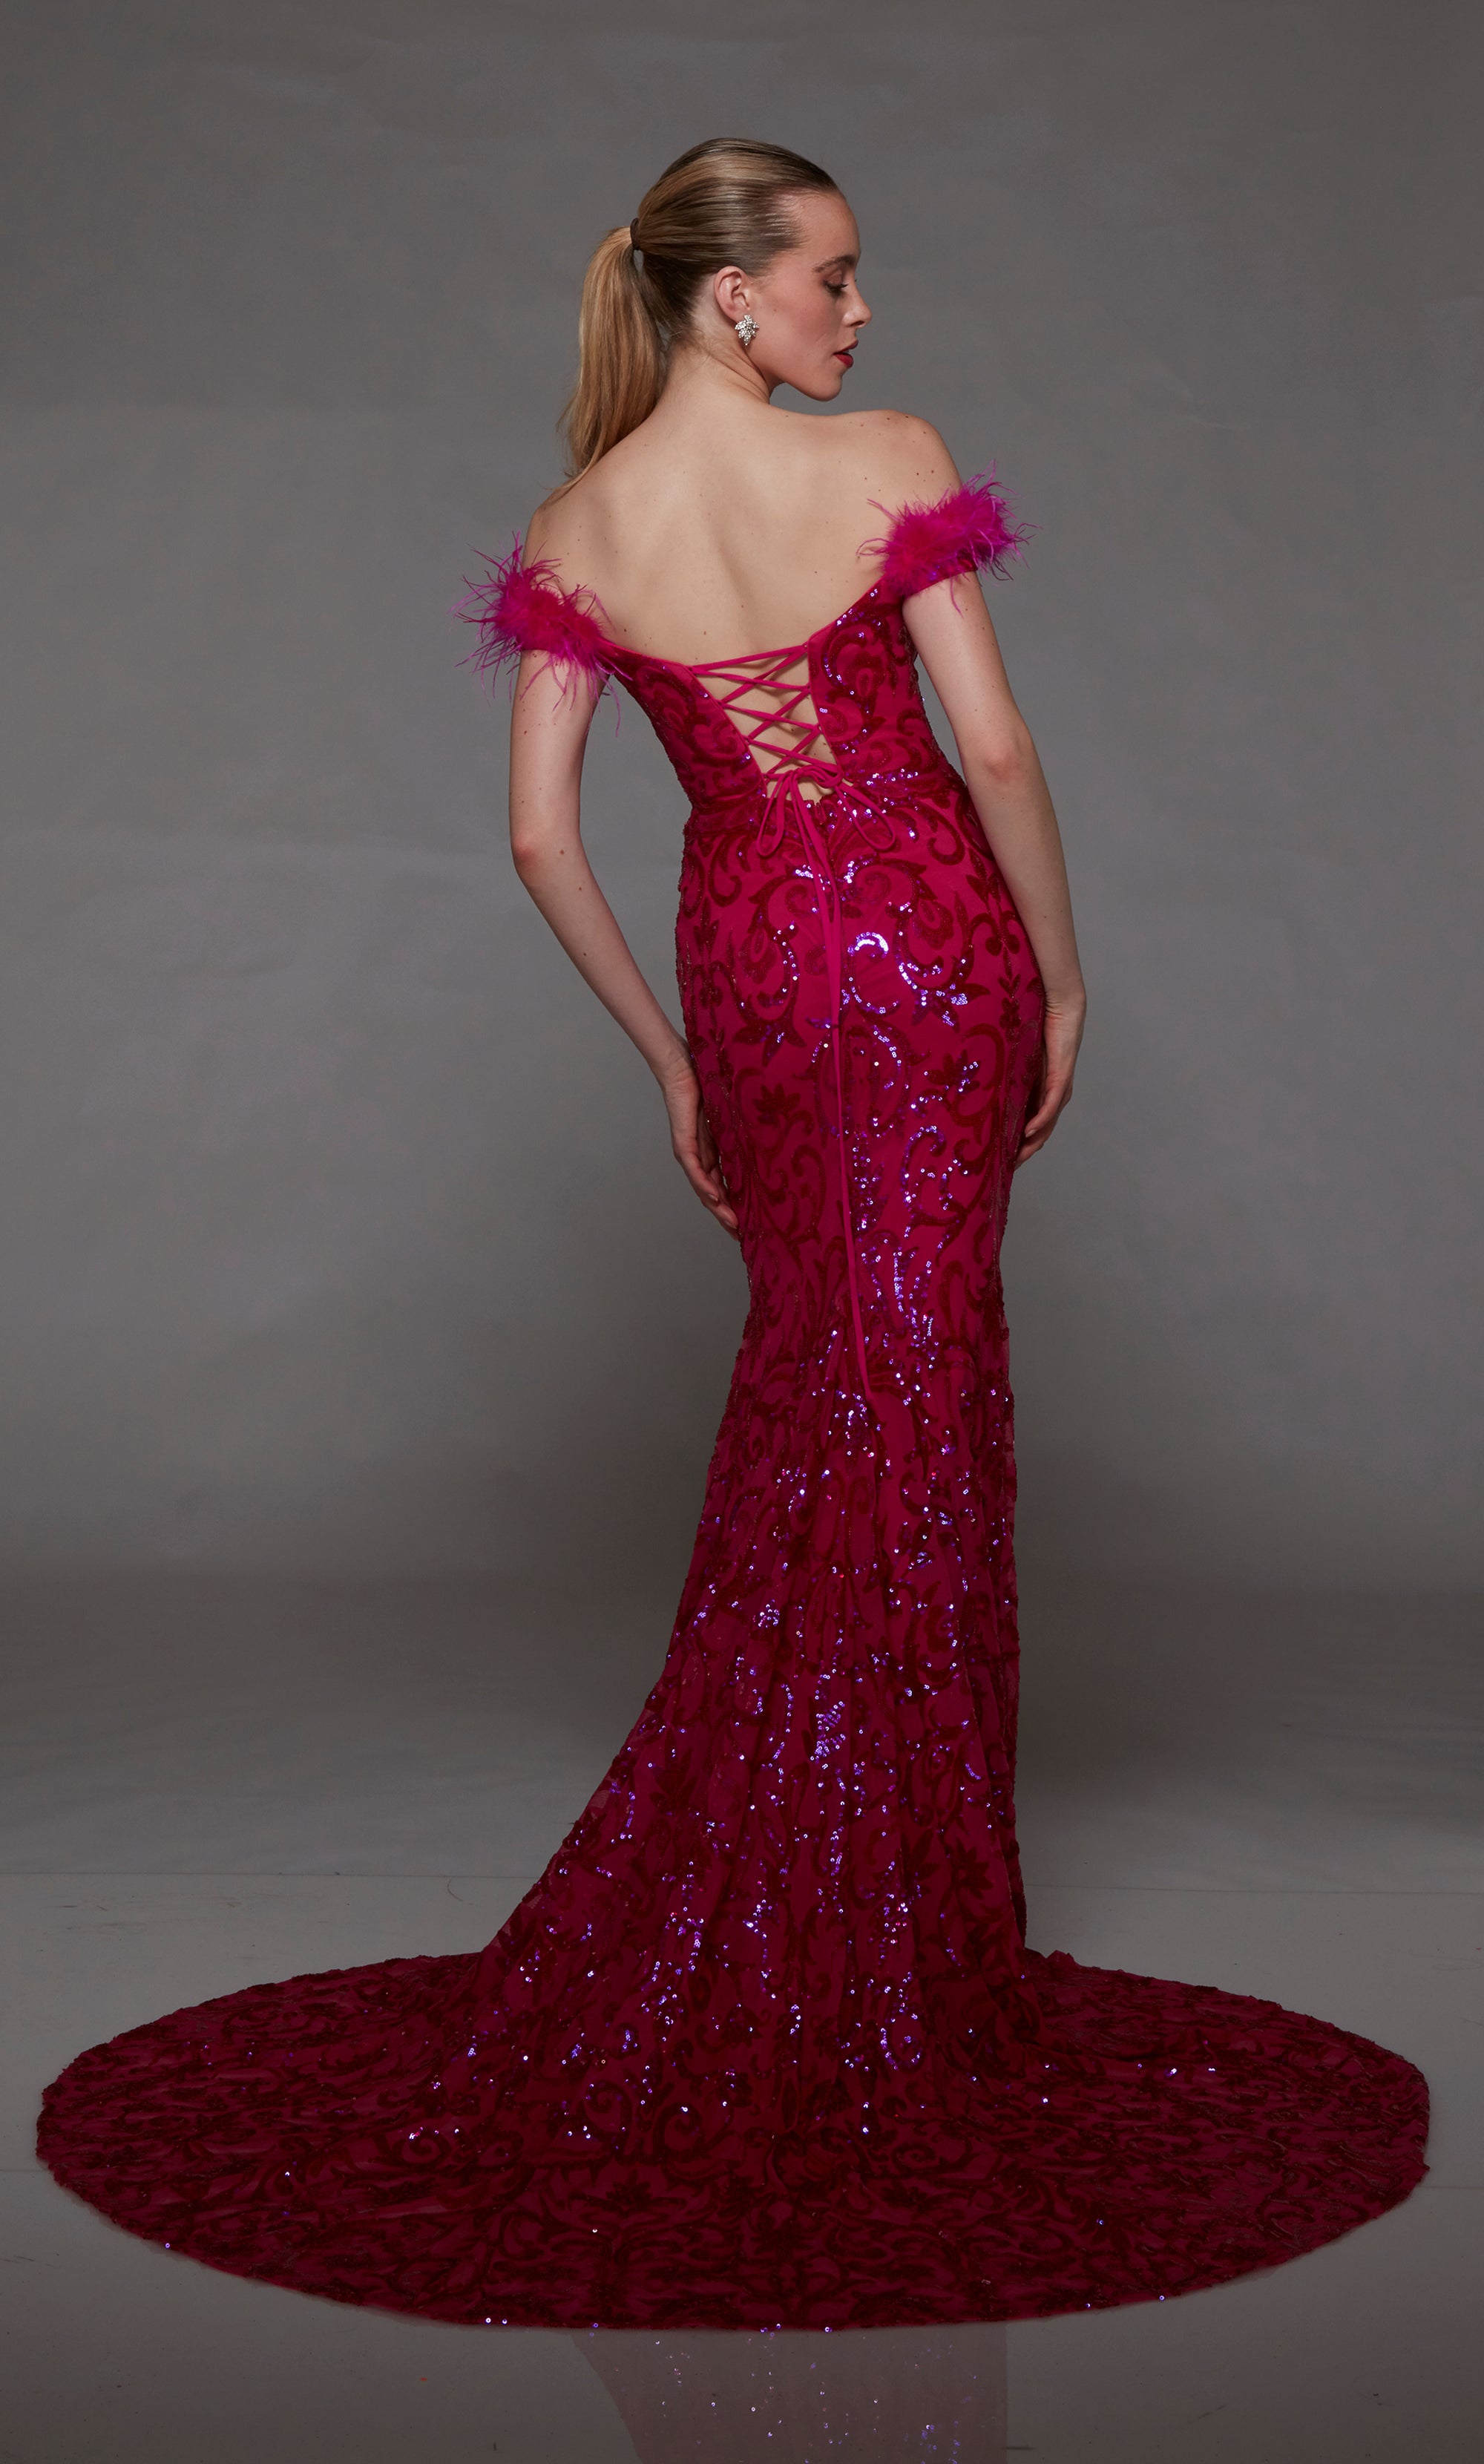 Pink off-shoulder designer dress: sequin embellishments, feather trim, lace-up back, and an glamorous train for elegant allure.